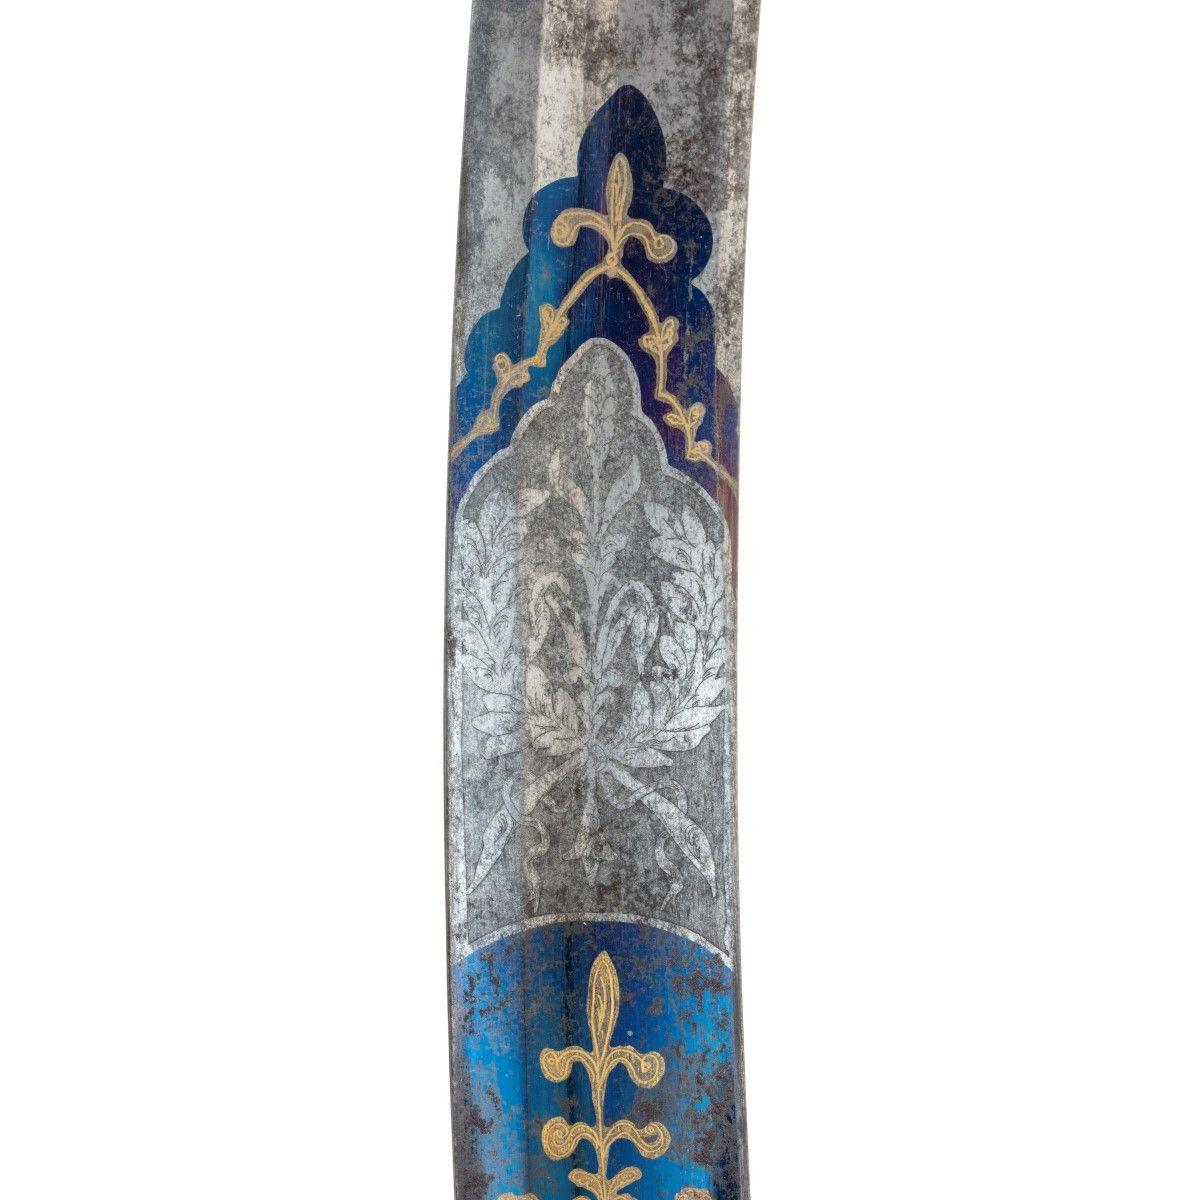 Midshipman Proctor’s Sword for Valour at the Battle of Copenhagen